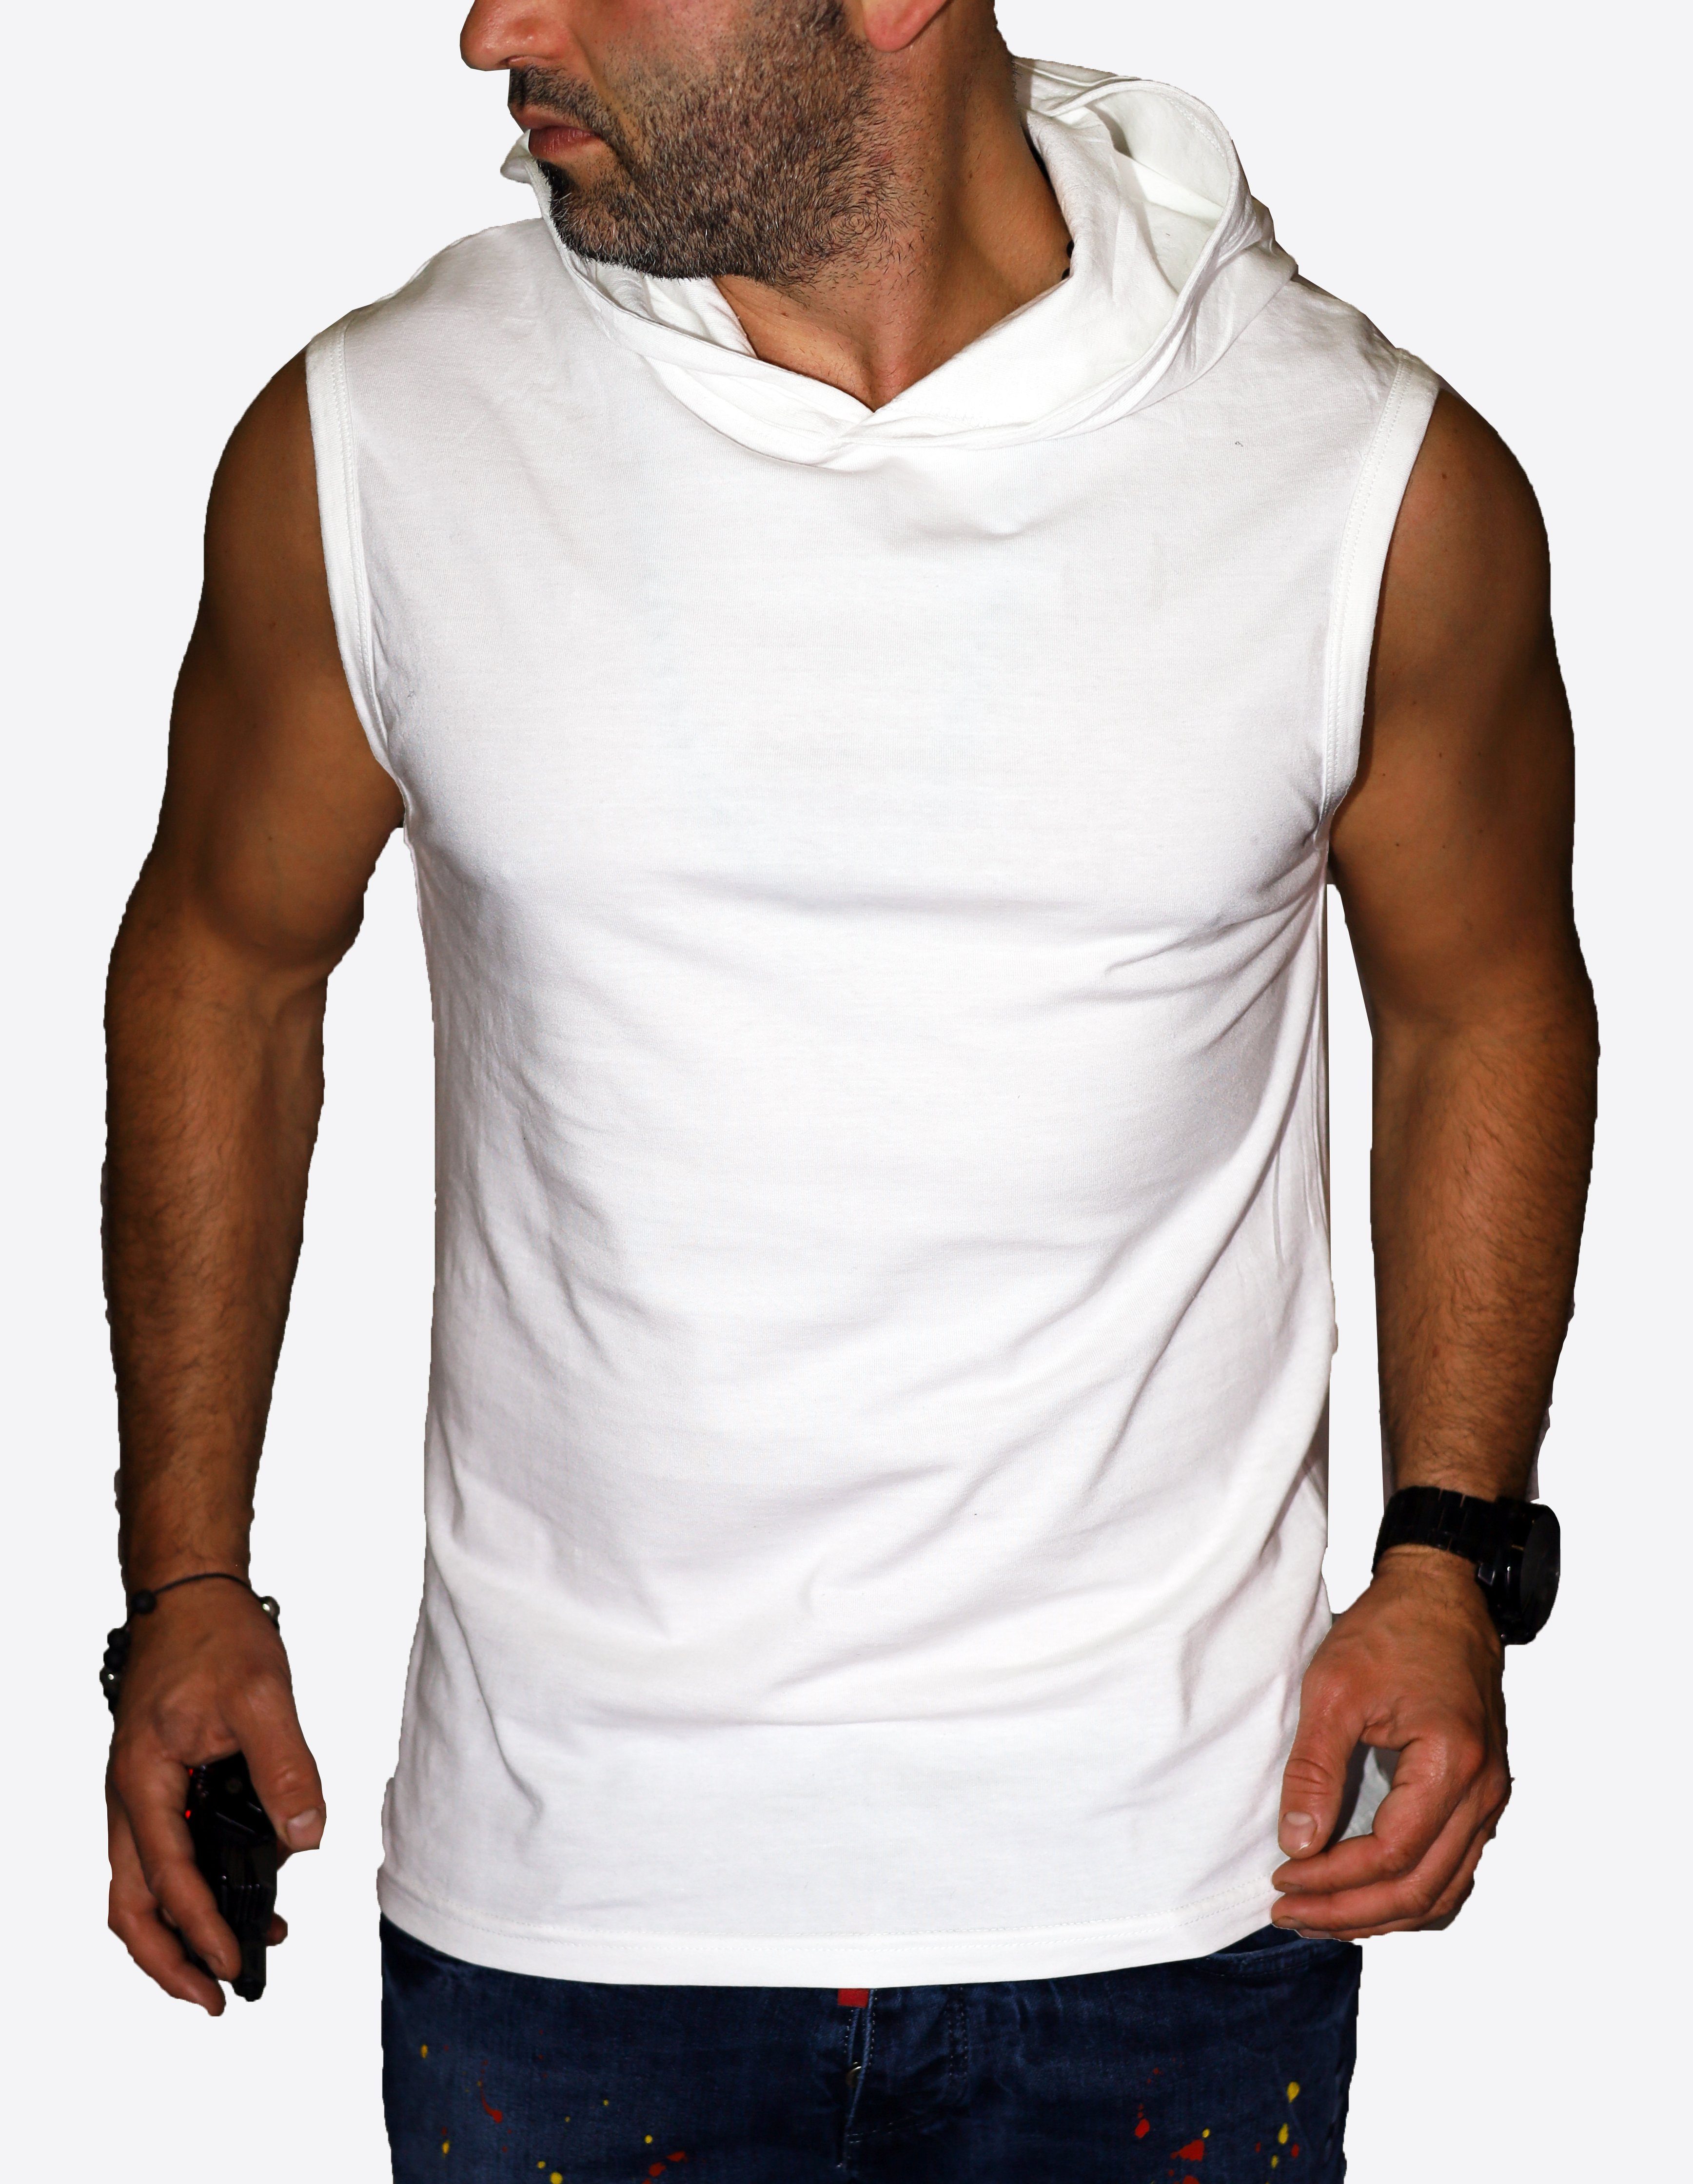 RMK T-Shirt Muskelshirt Muscleshirt Tanktop